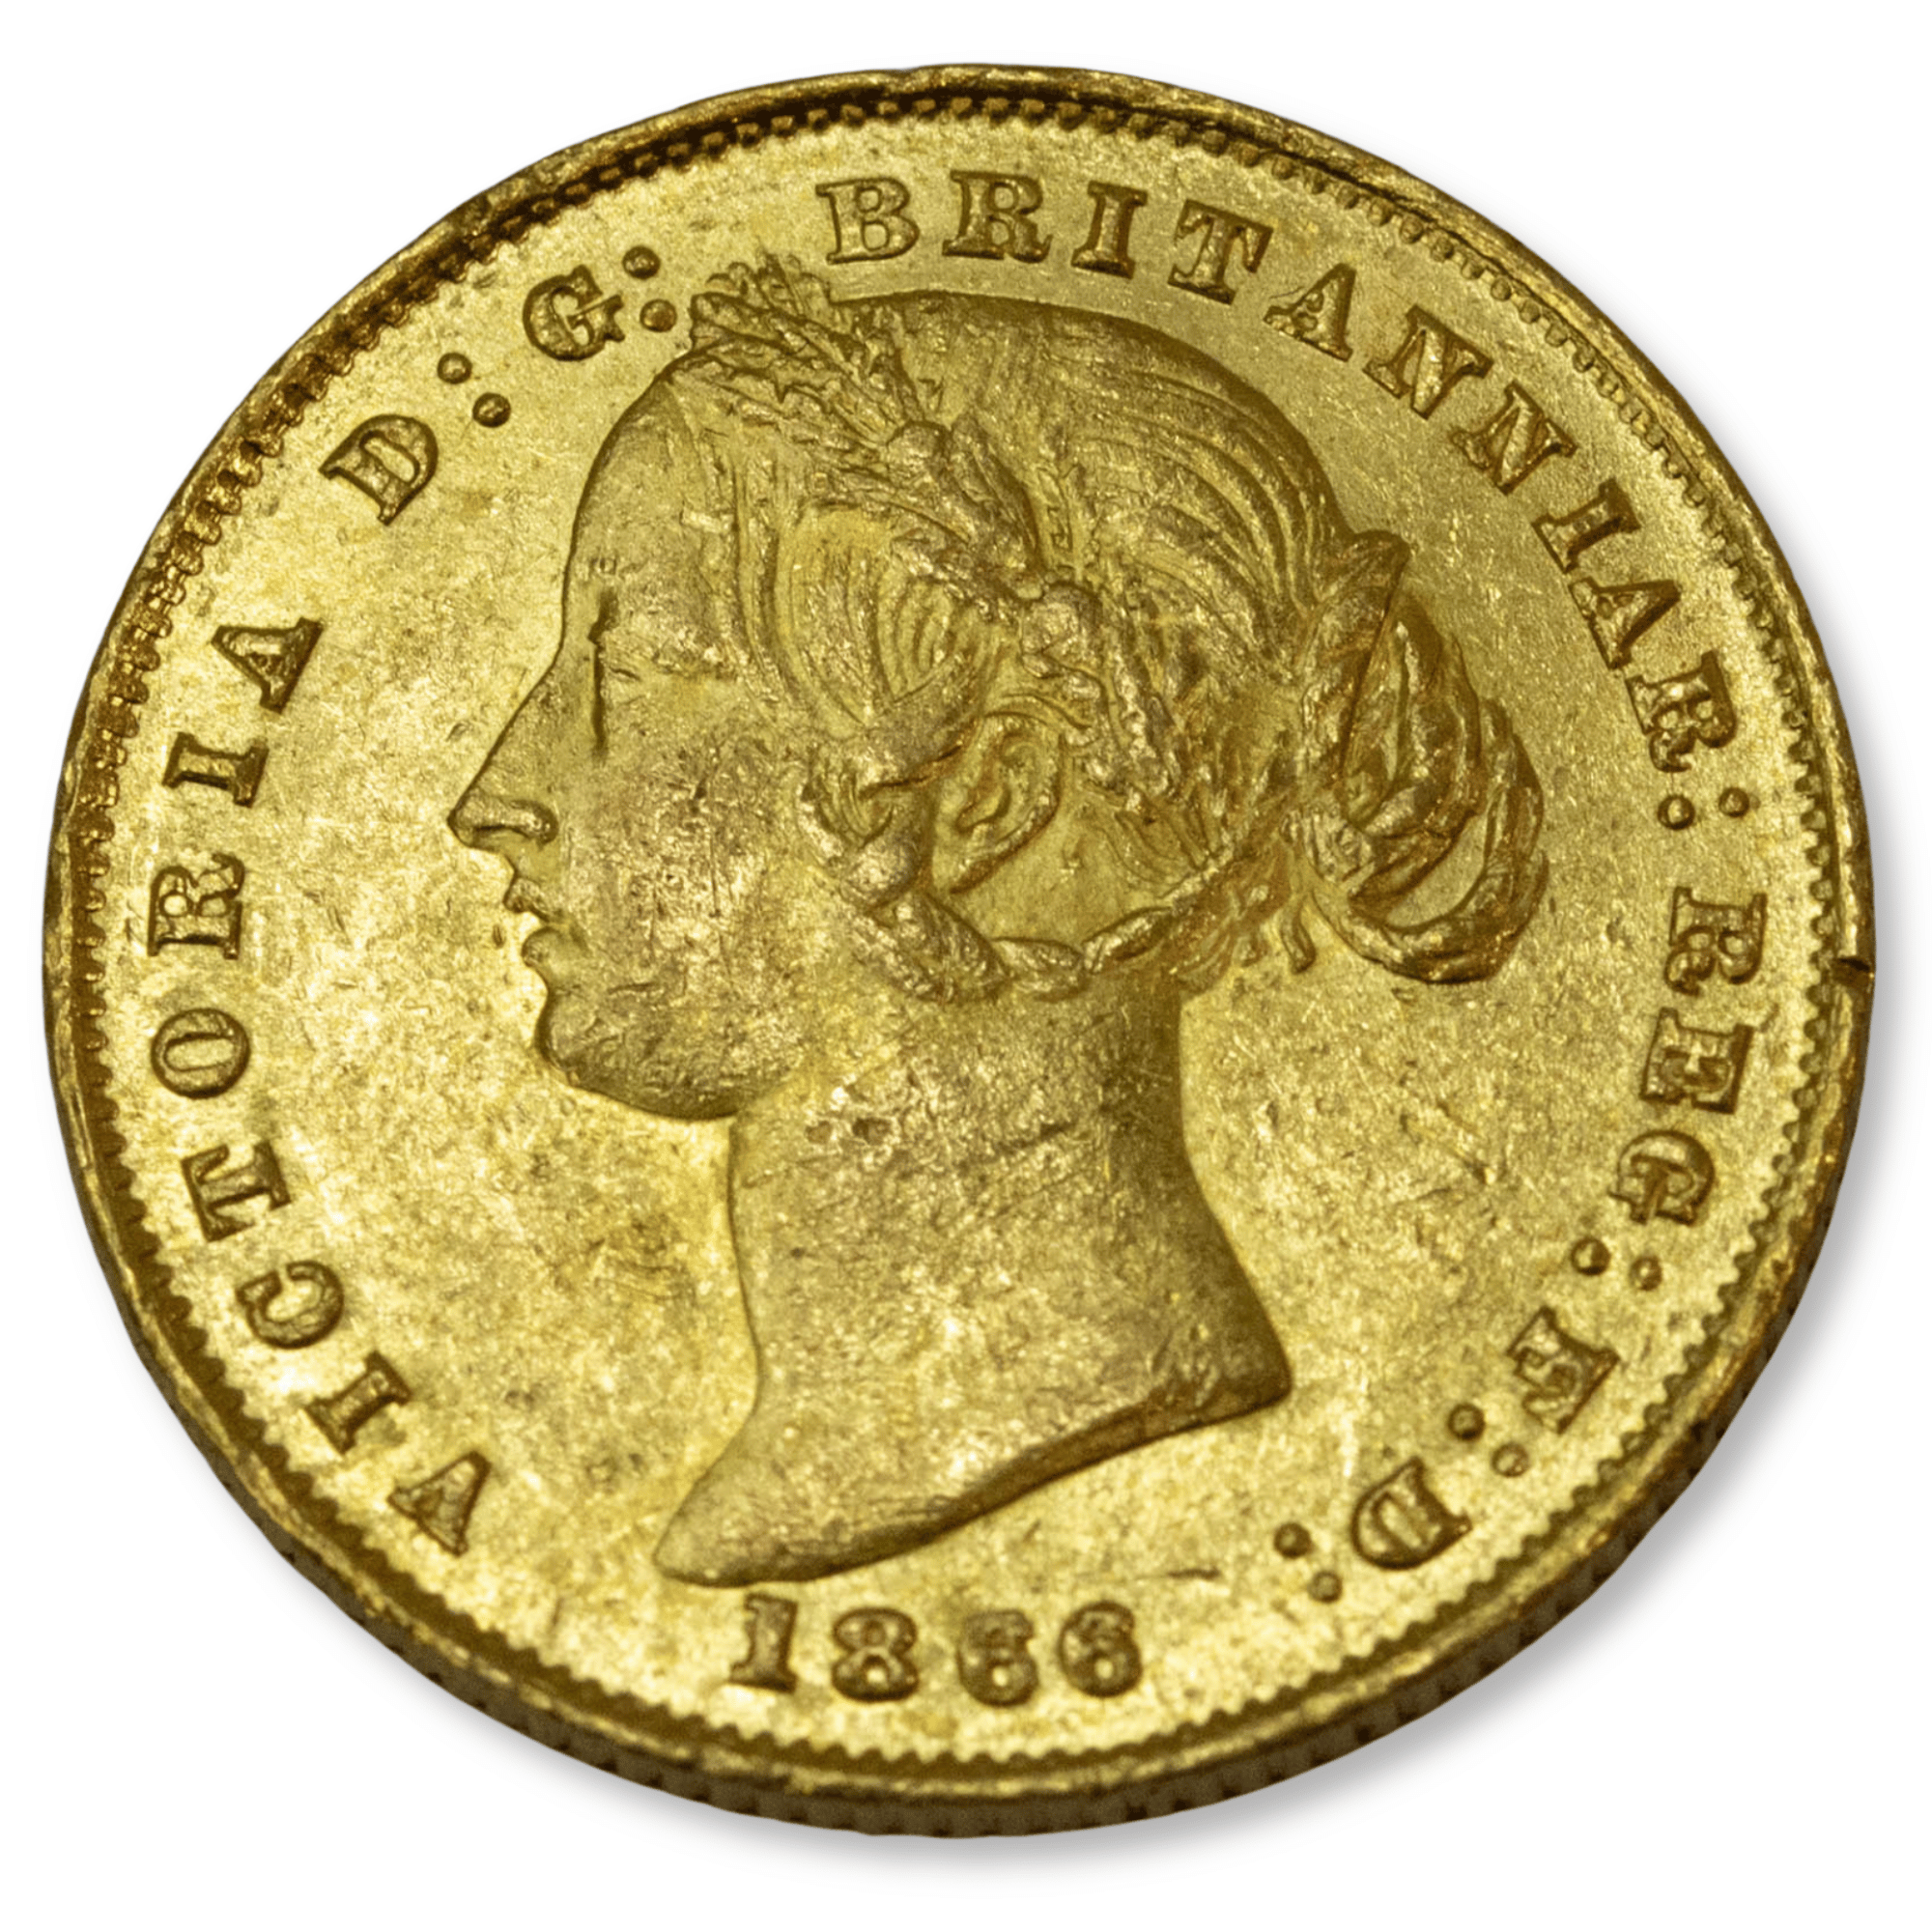 1866 Sydney Mint Sovereign About Extra Fine / Extra Fine